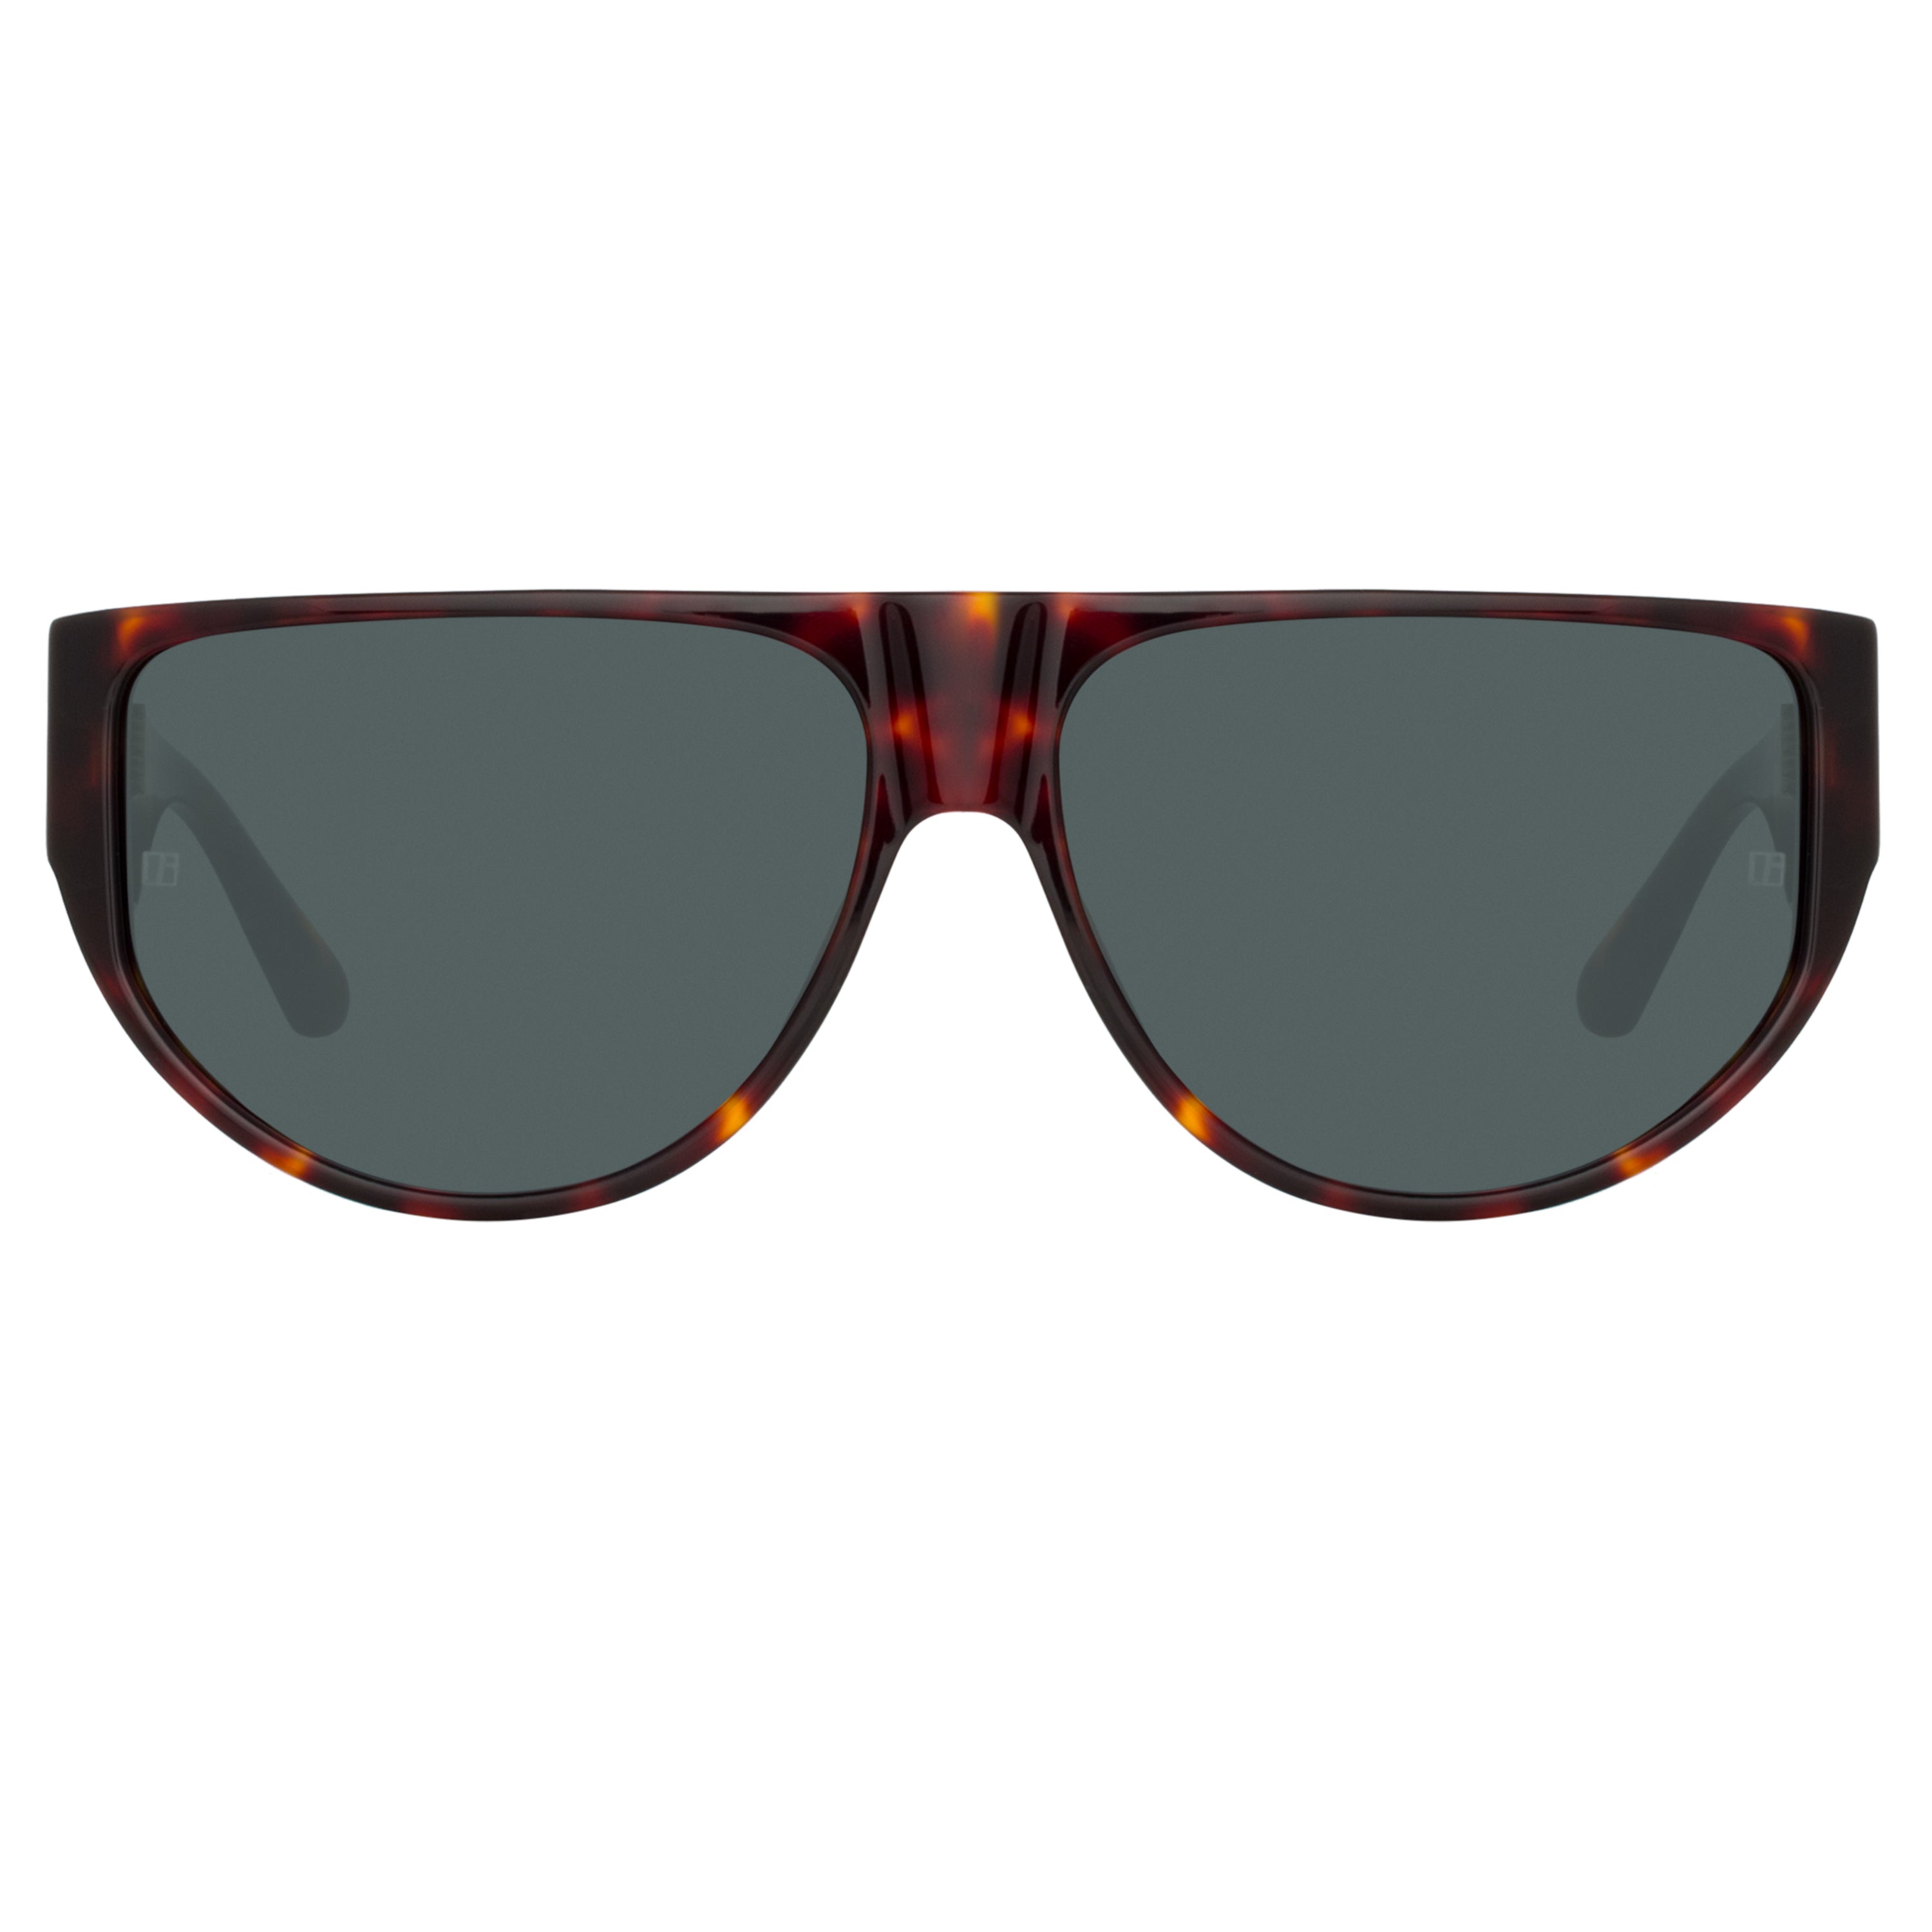 Men’s Elodie Flat Top Sunglasses in Tortoiseshell